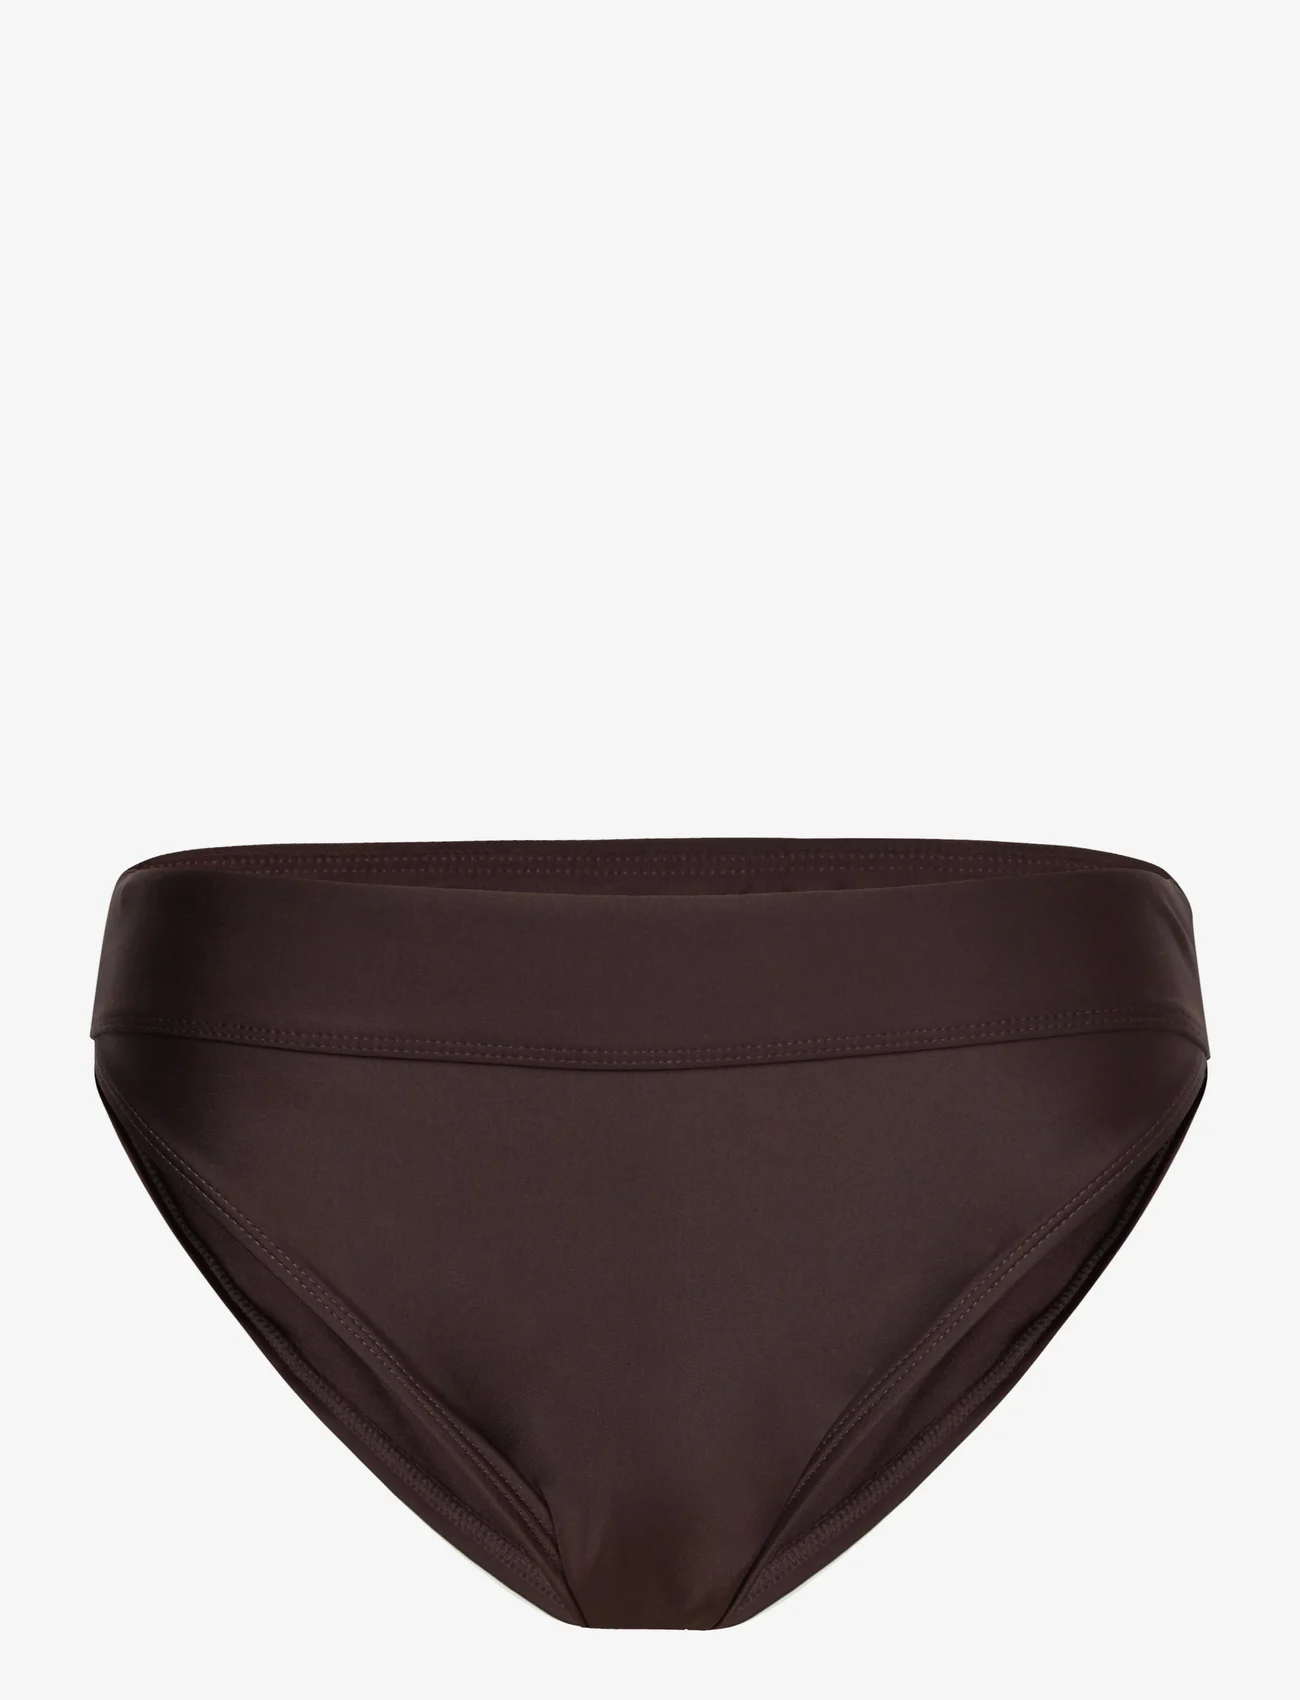 Rosemunde - Bikini brief high waist - bikinihousut - black brown - 0